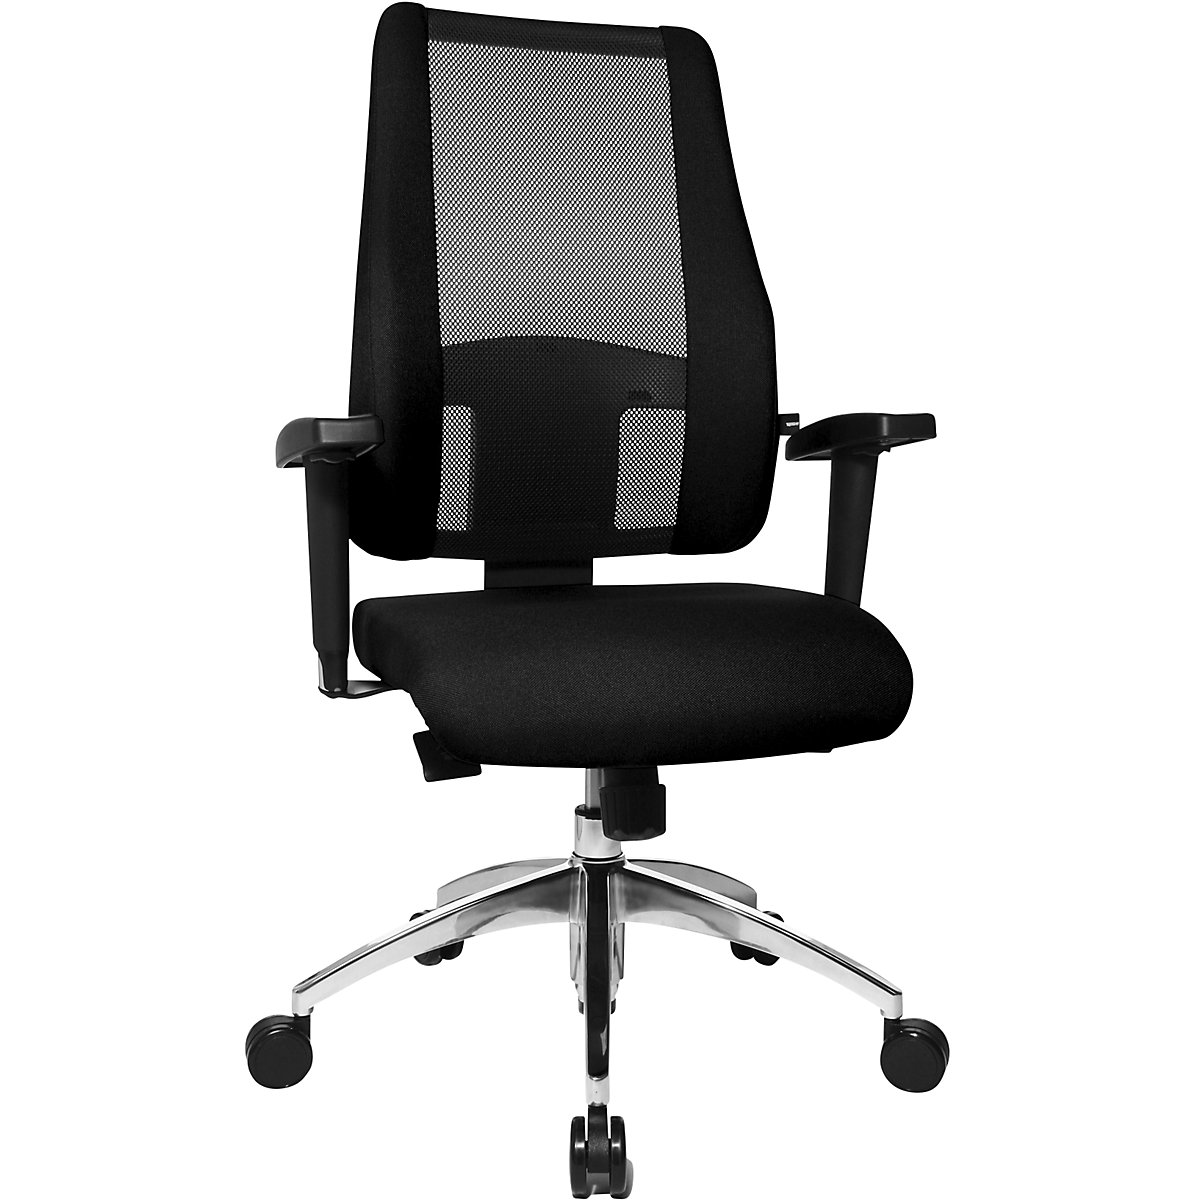 AIR SYNCRO office swivel chair - Topstar